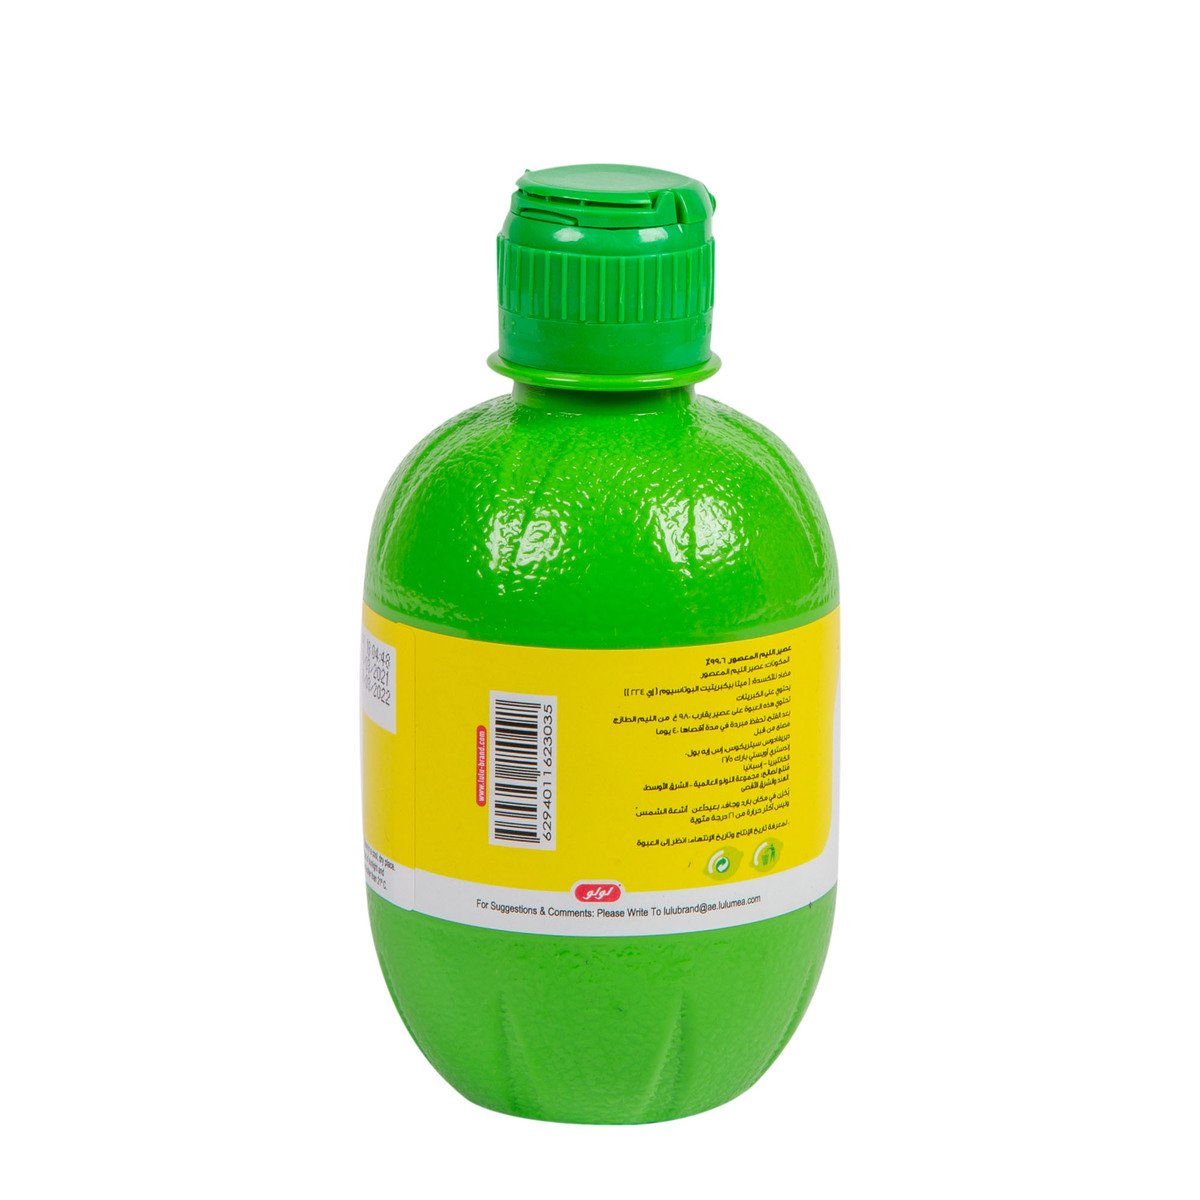 LuLu Freshly Squeezed Lime Juice 280 ml